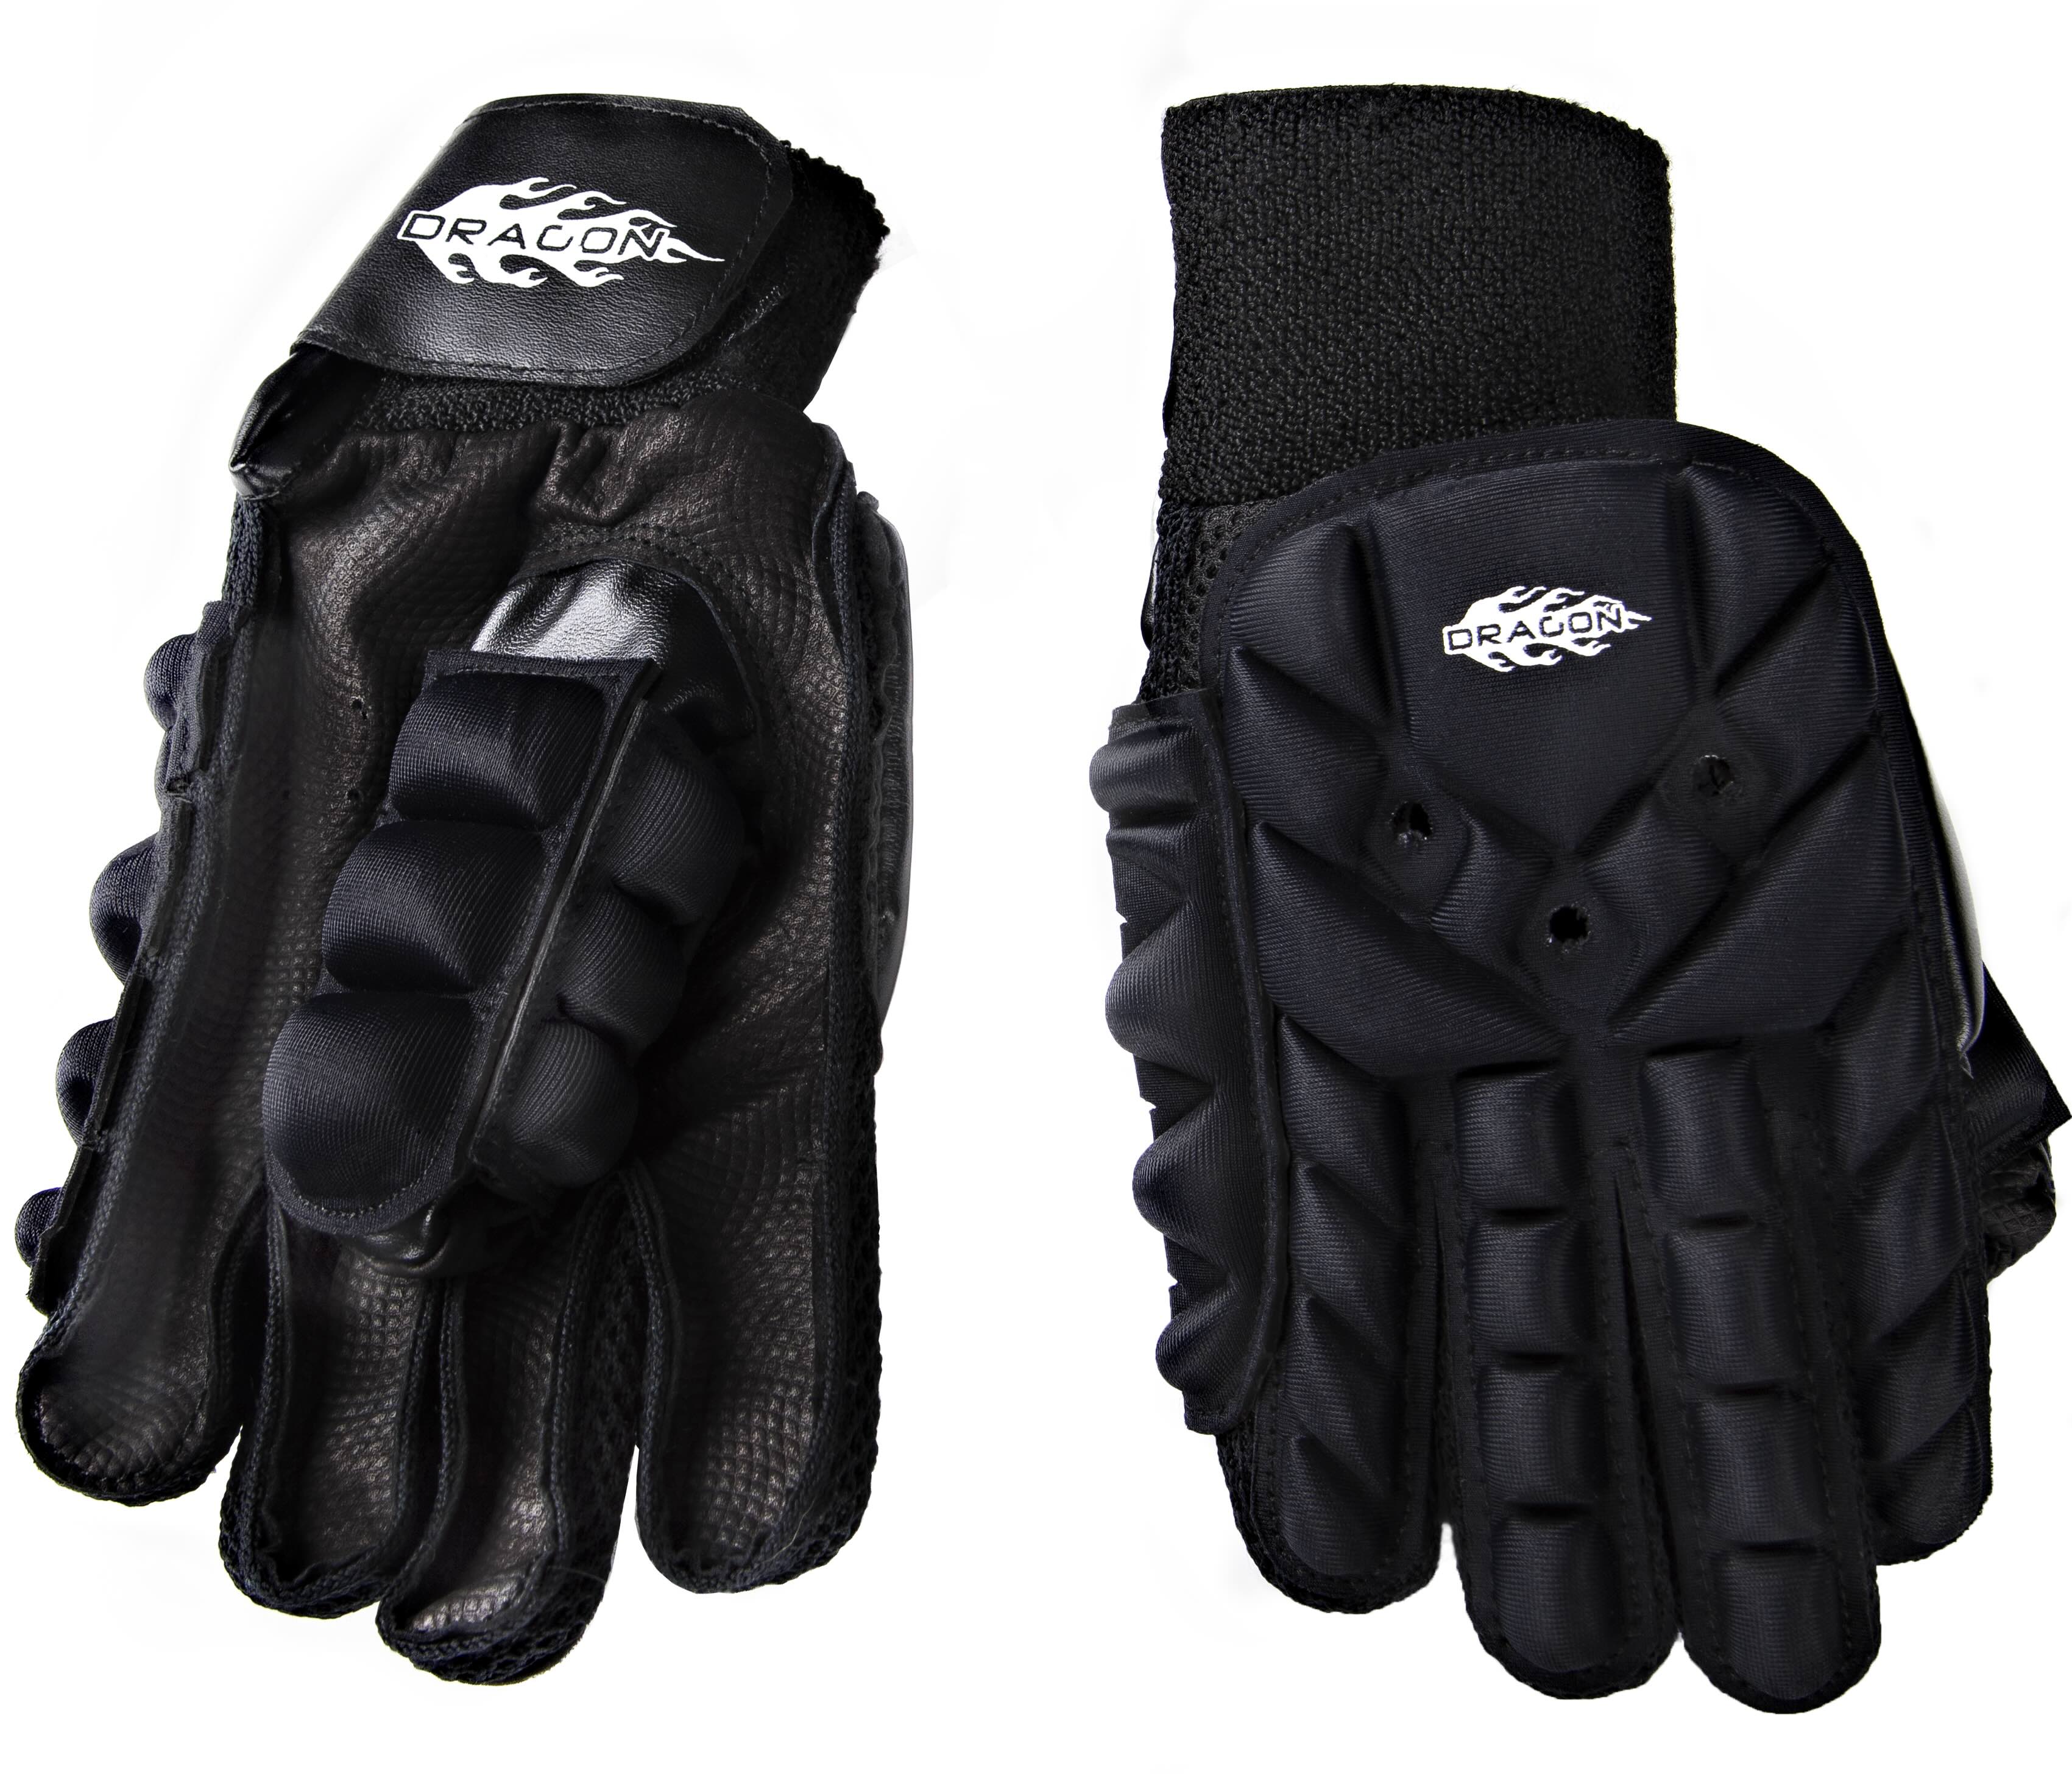 Dragon Black Full Protection Gloves